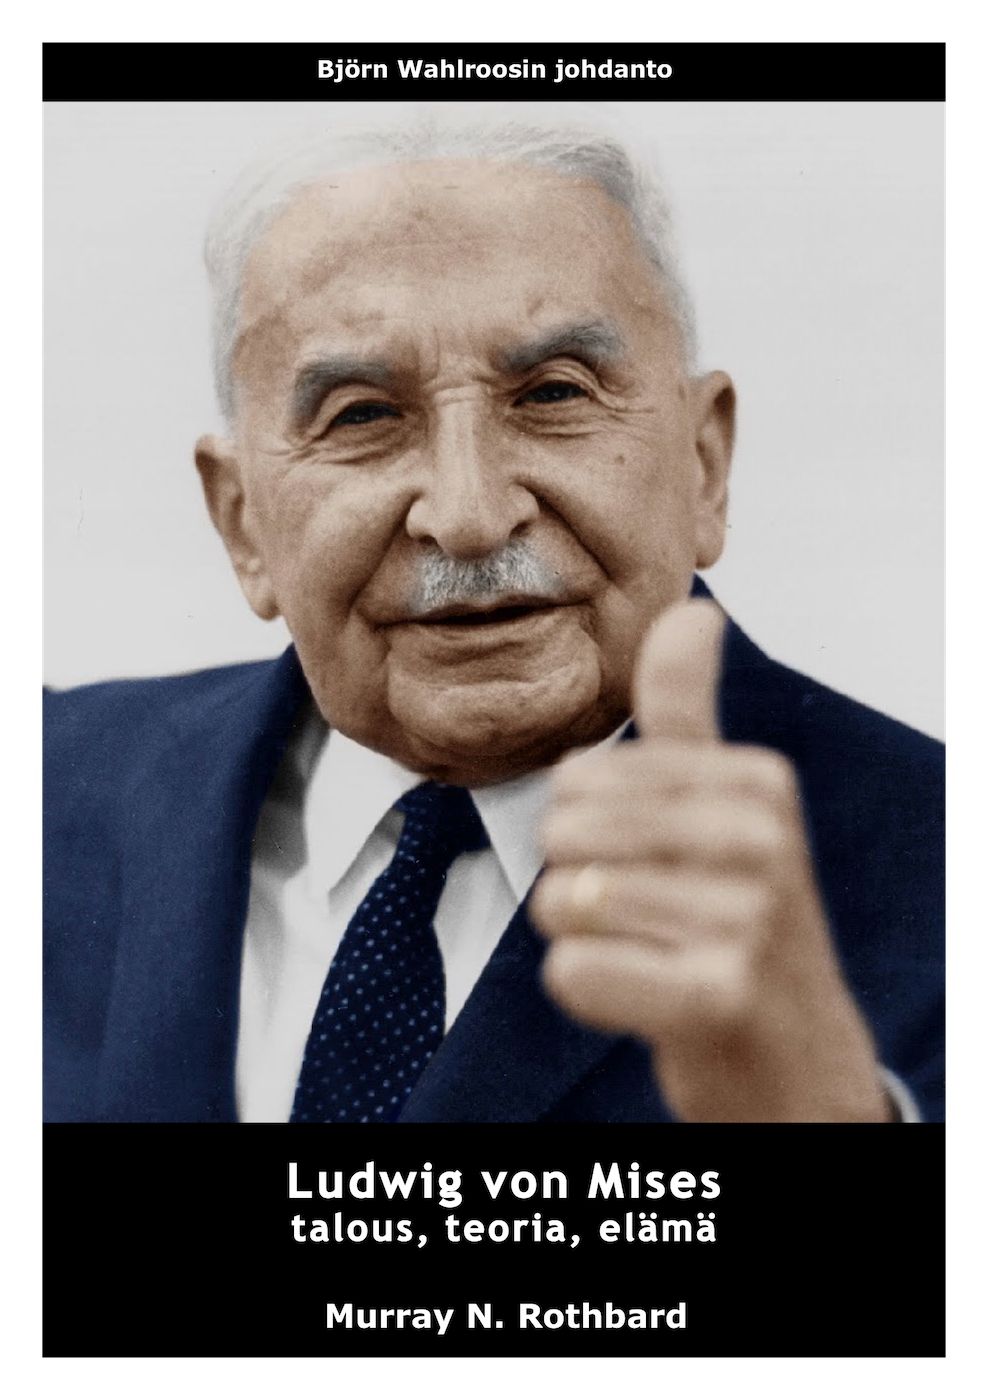 Ludwig von Mises - talous, teoria, elämä, e-bog af Murray N. Rothbard